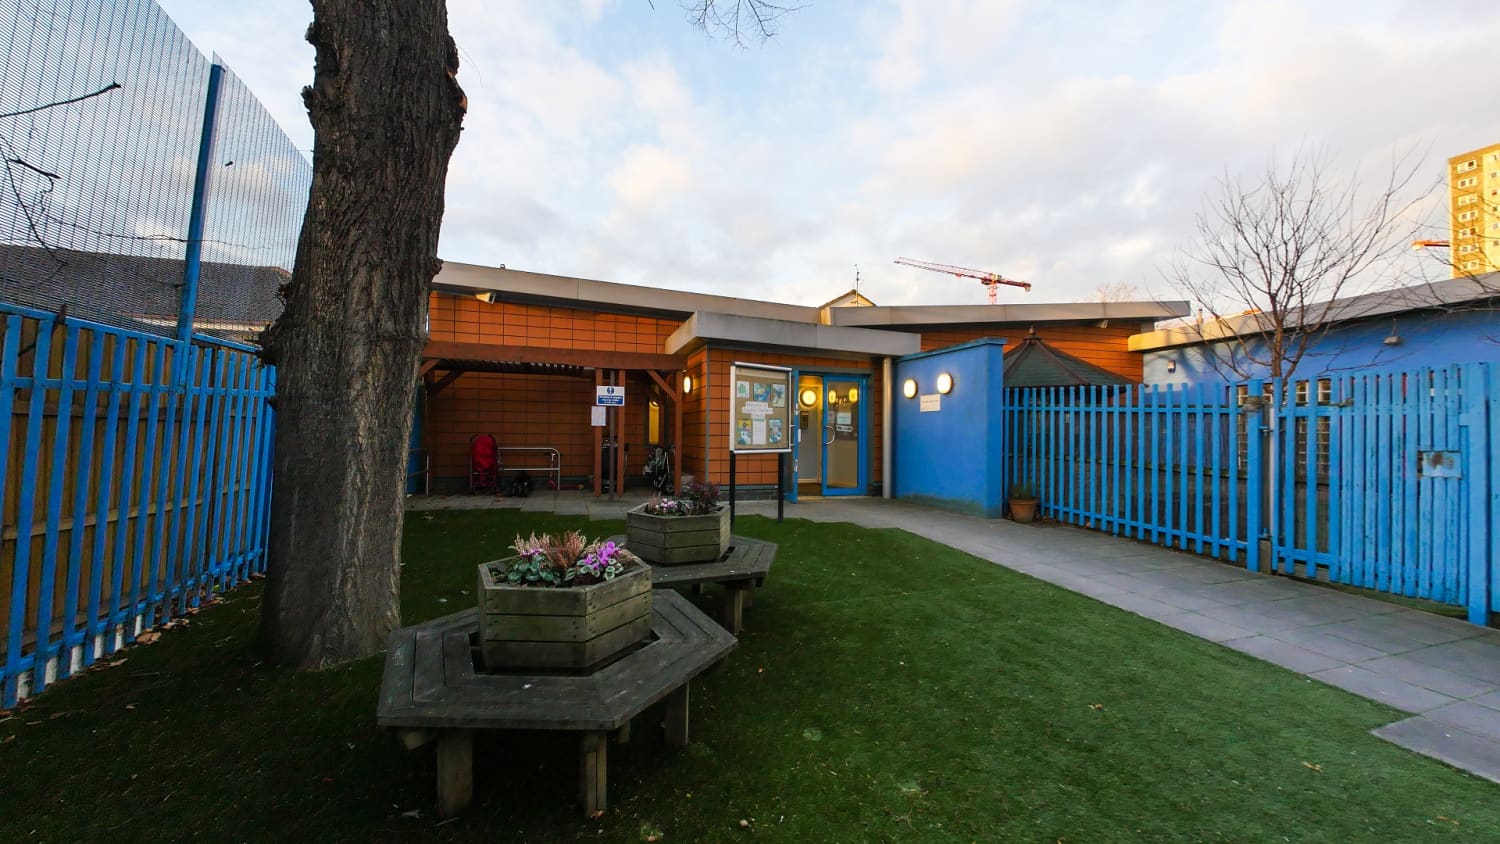 Chestnut Nursery Schools Introductory Image - Gascoigne